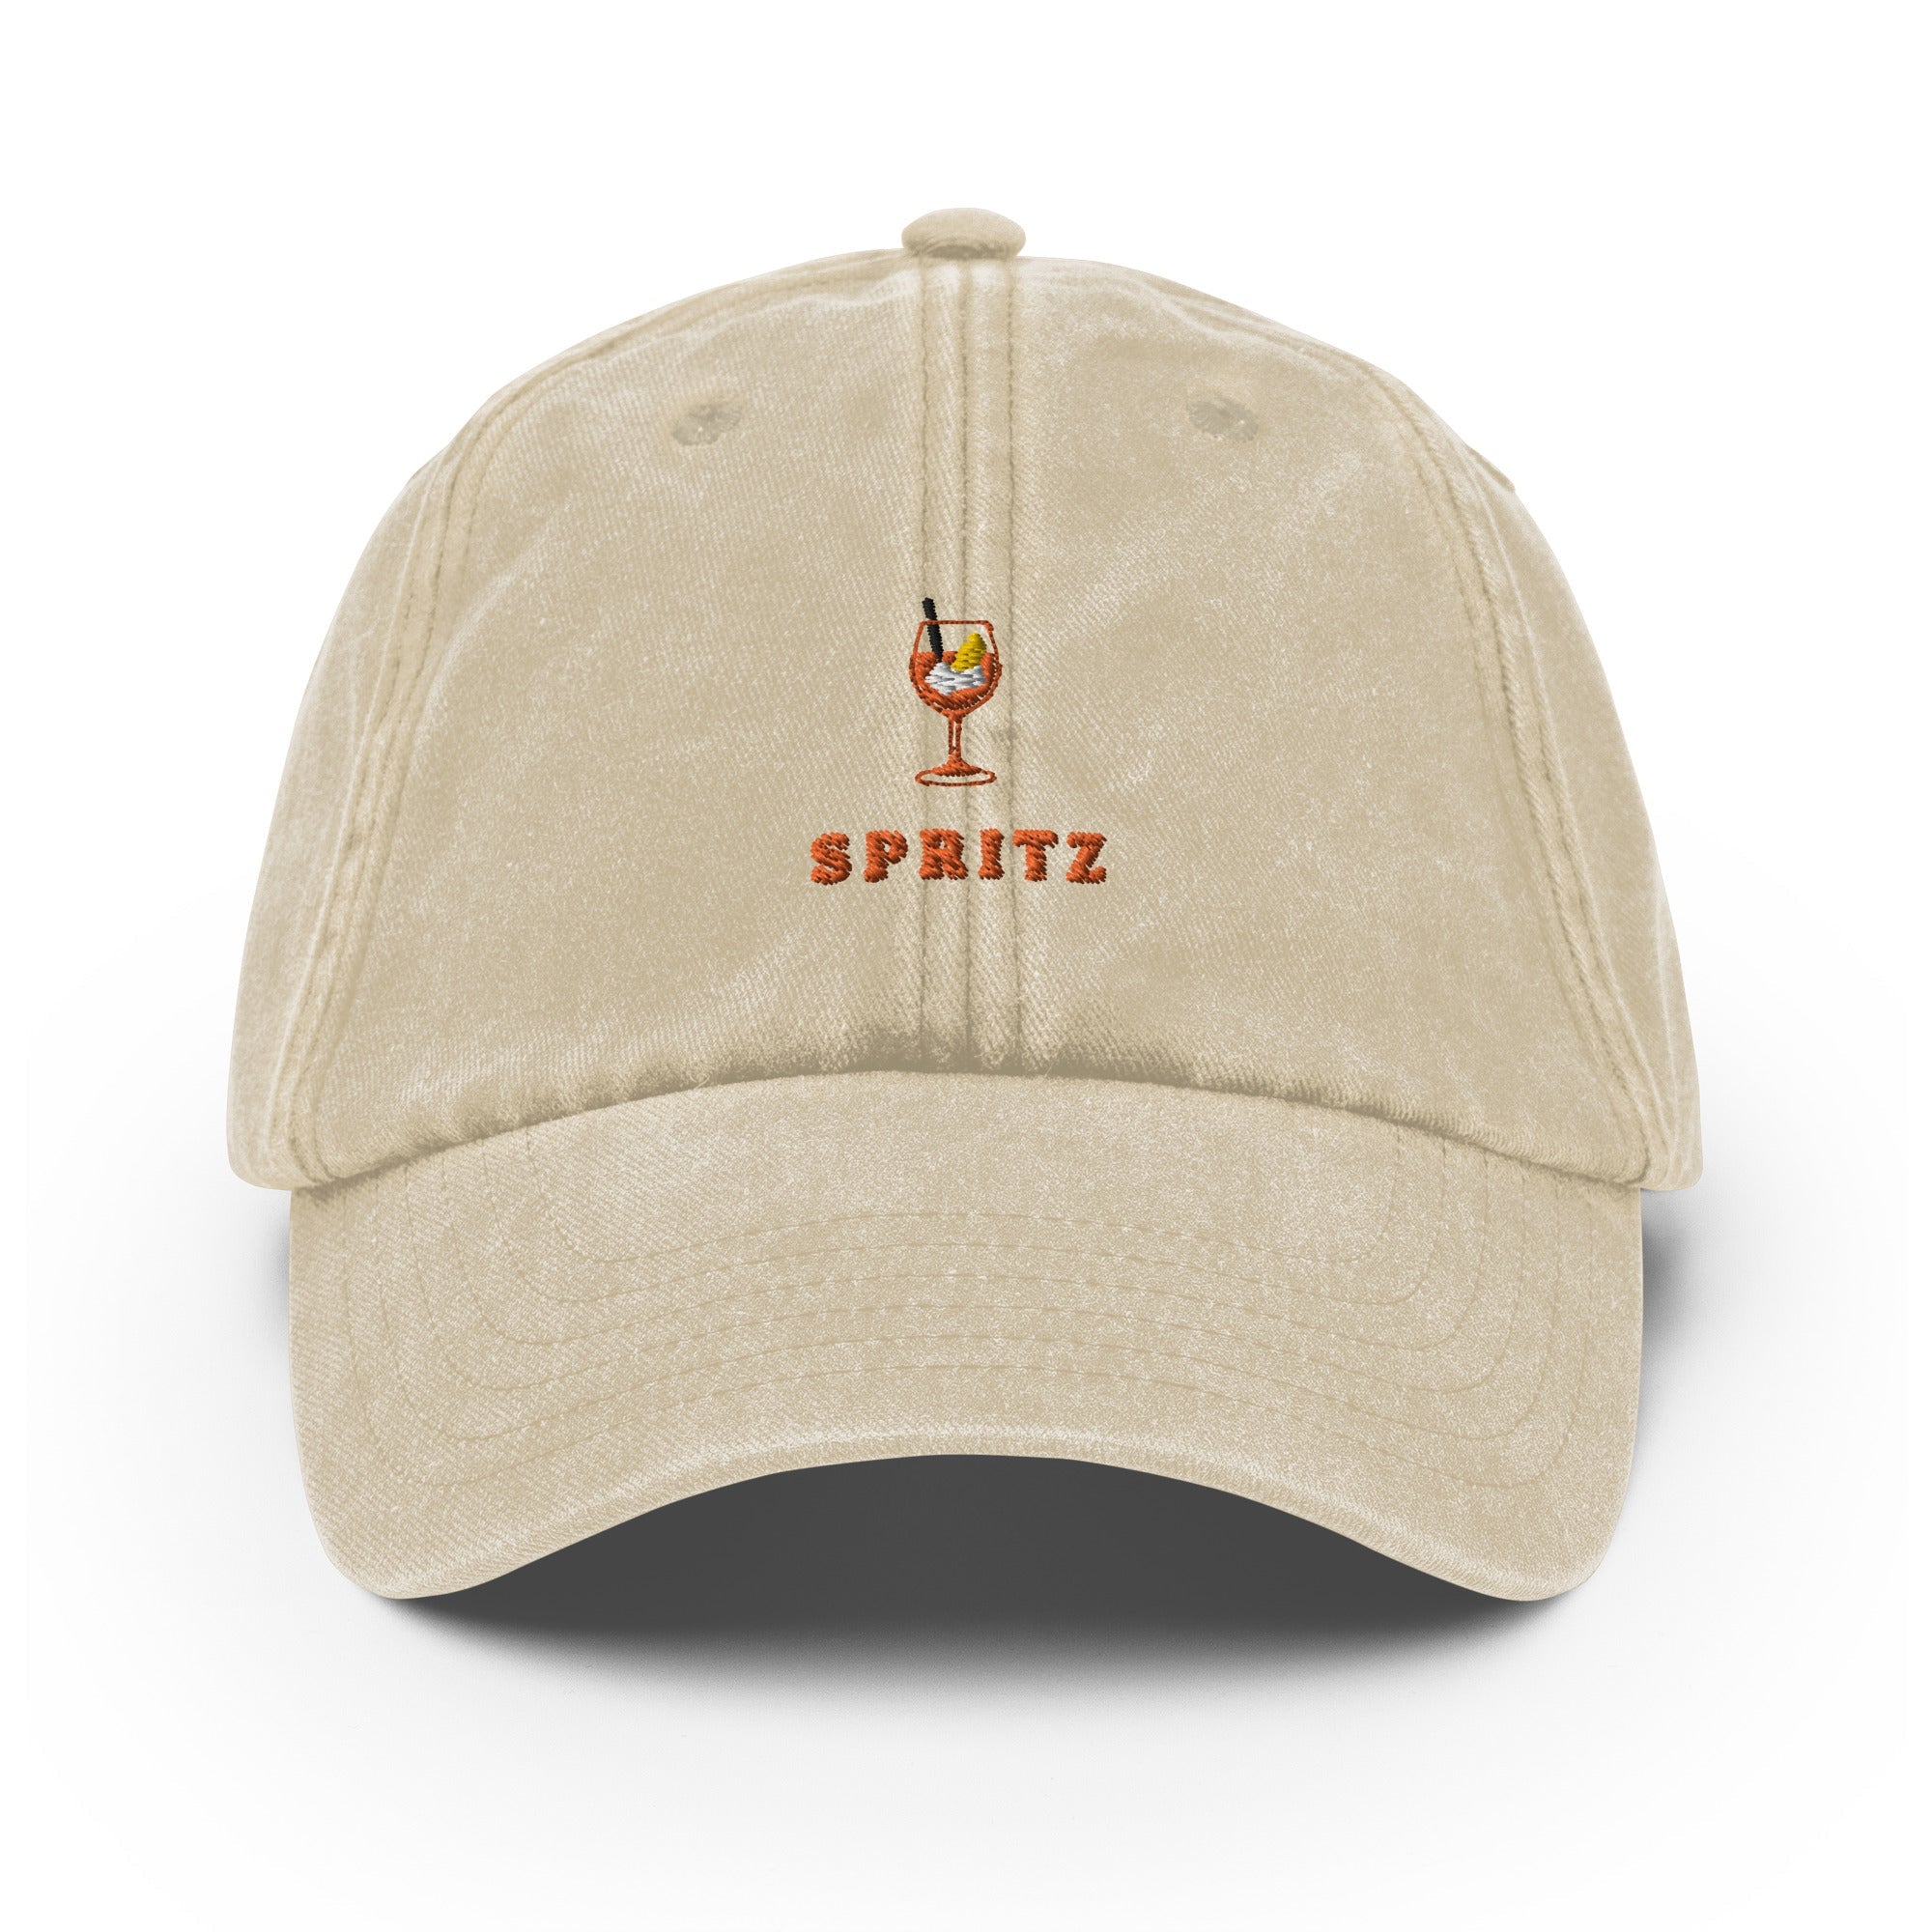 Spritz Vintage Cap - The Refined Spirit